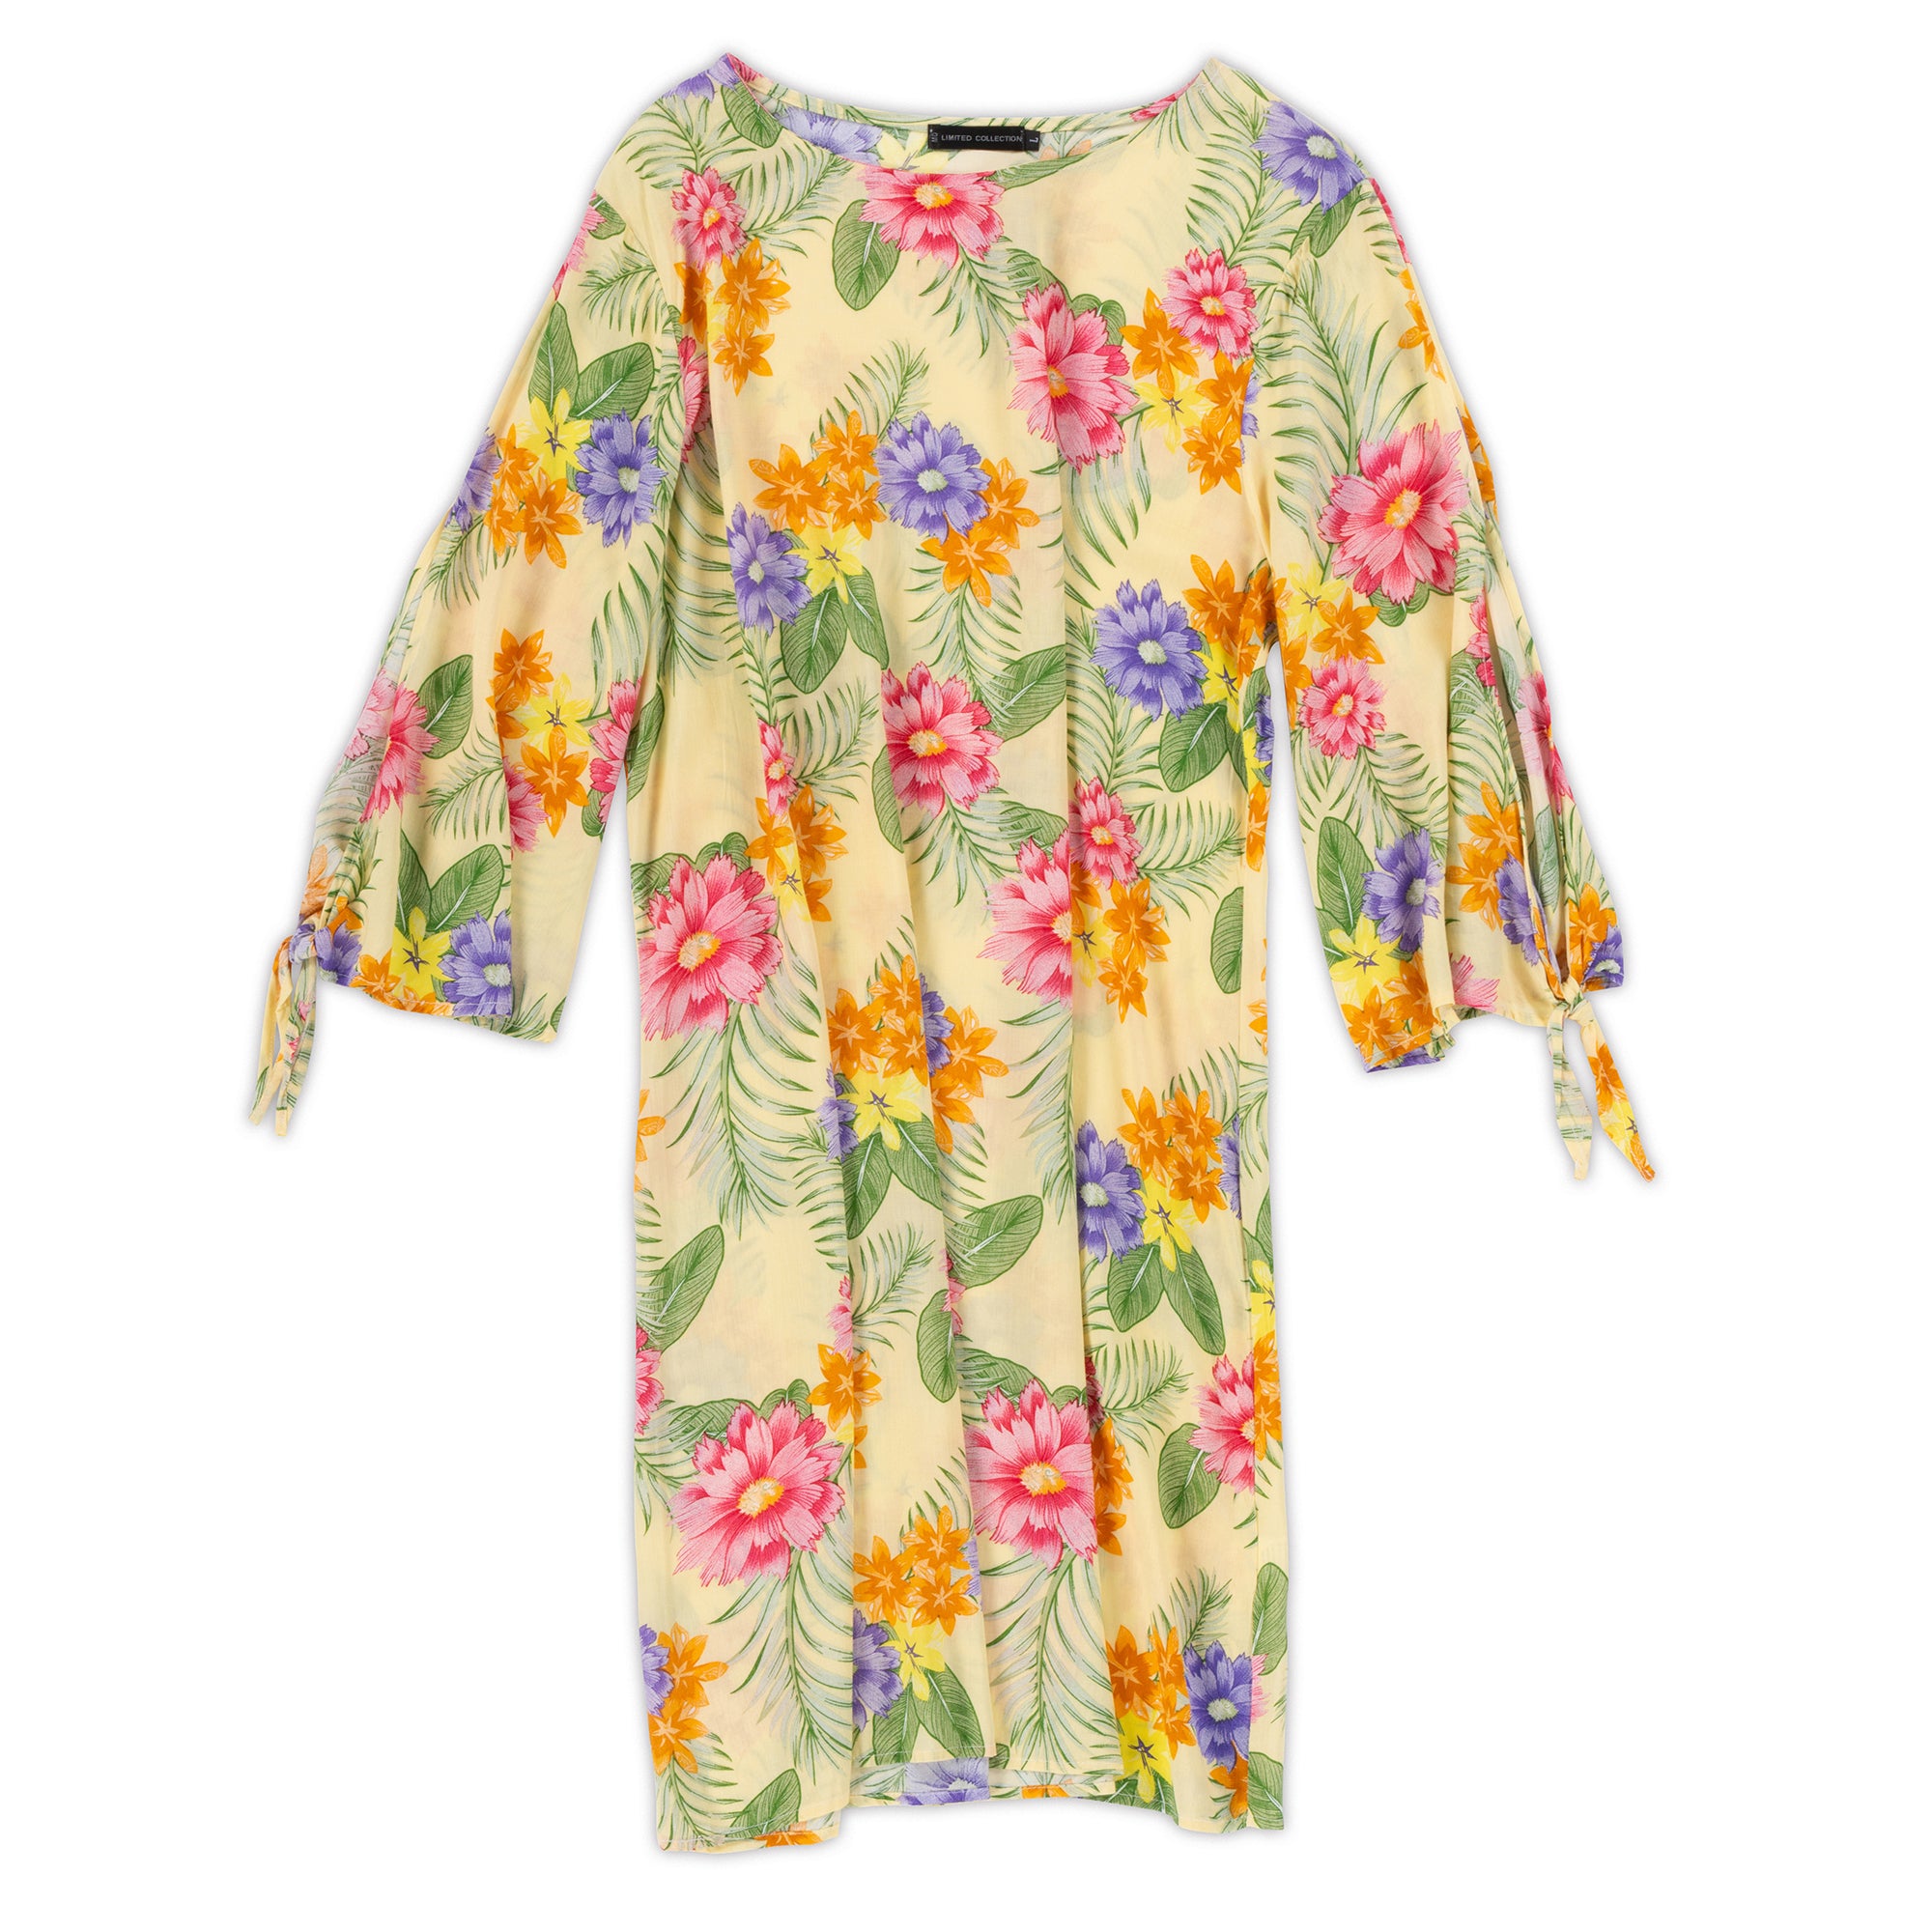 Women's Yellow Floral Summer Dress - 2 Sizes - 3pcs/pack ($14.90/pc)